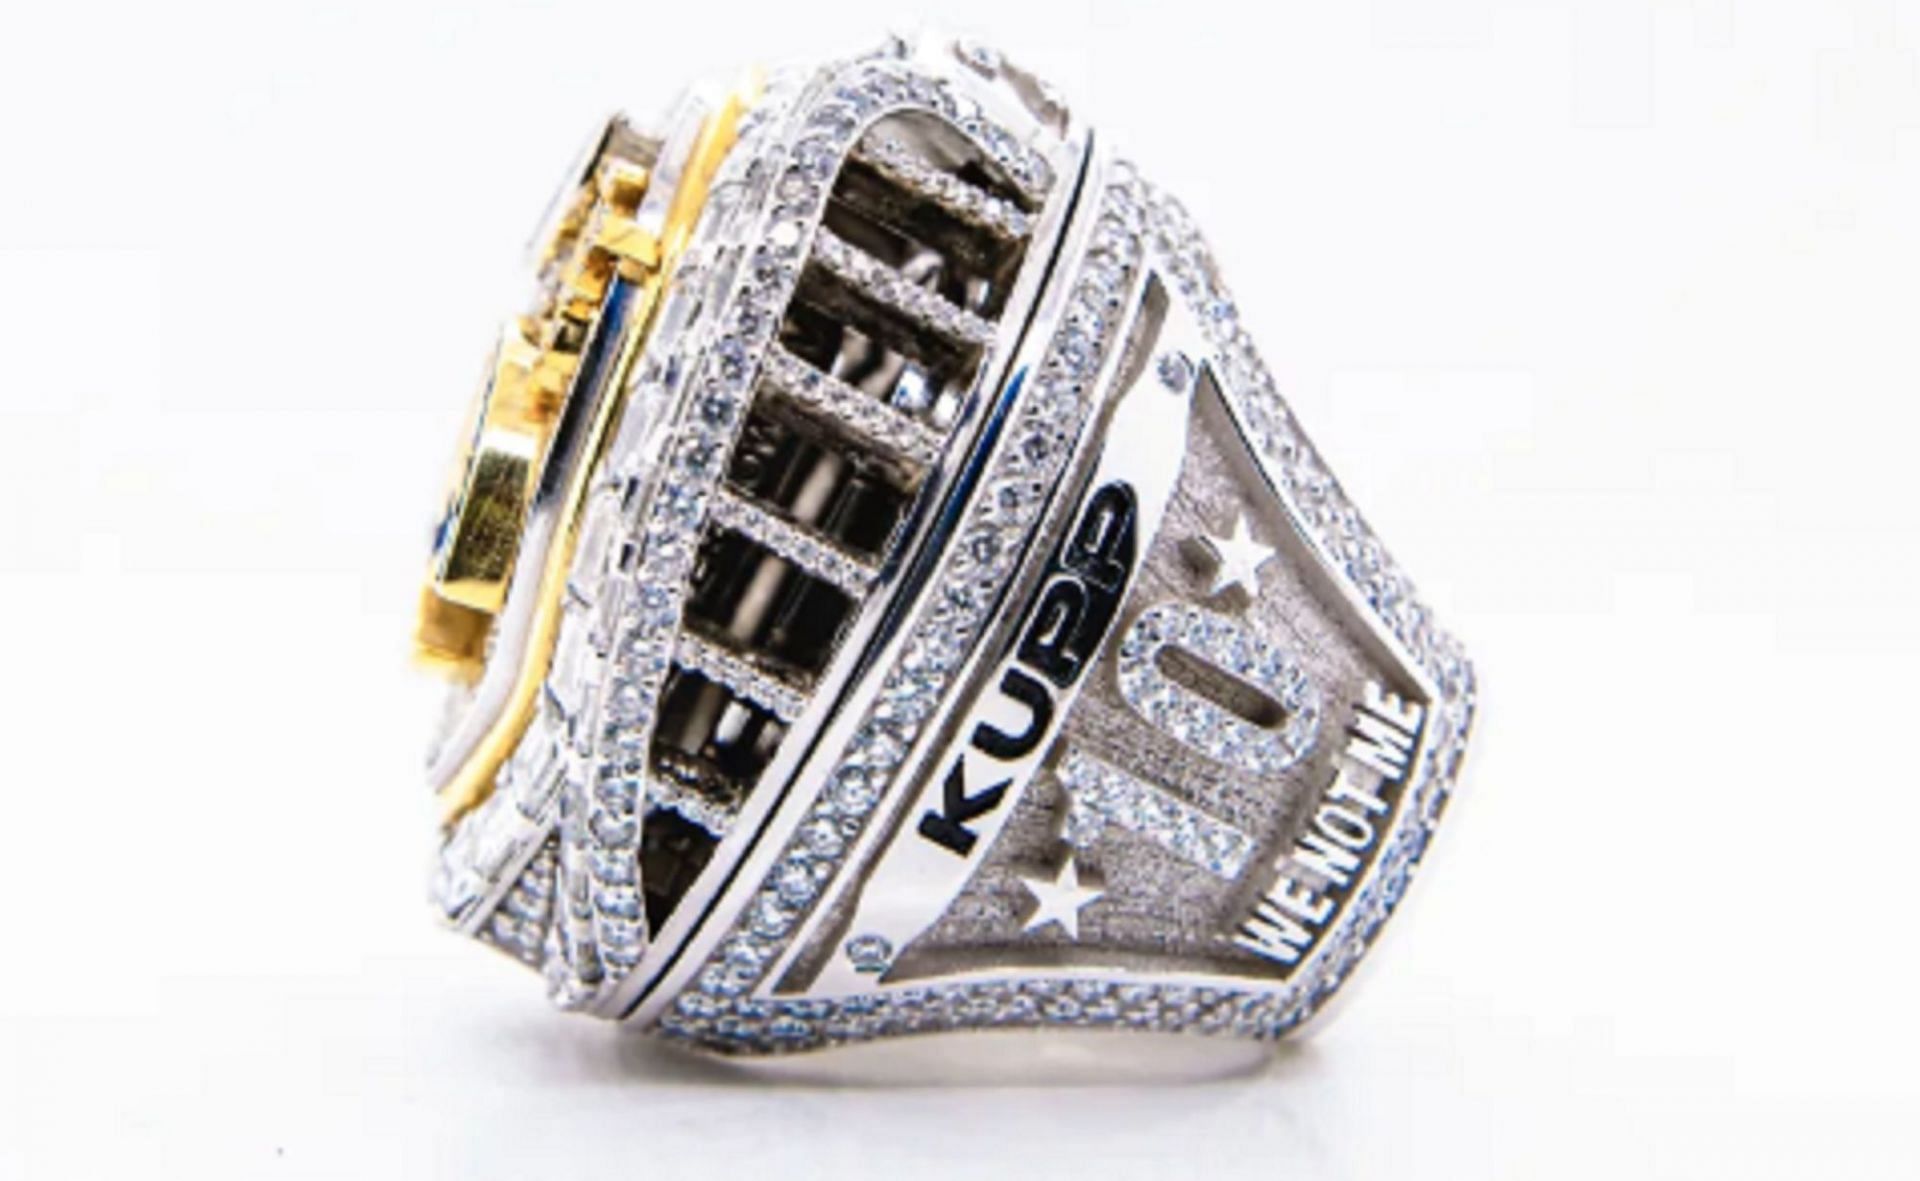 Cooper Kupp&#039;s Champion ring - Credit: therams.com